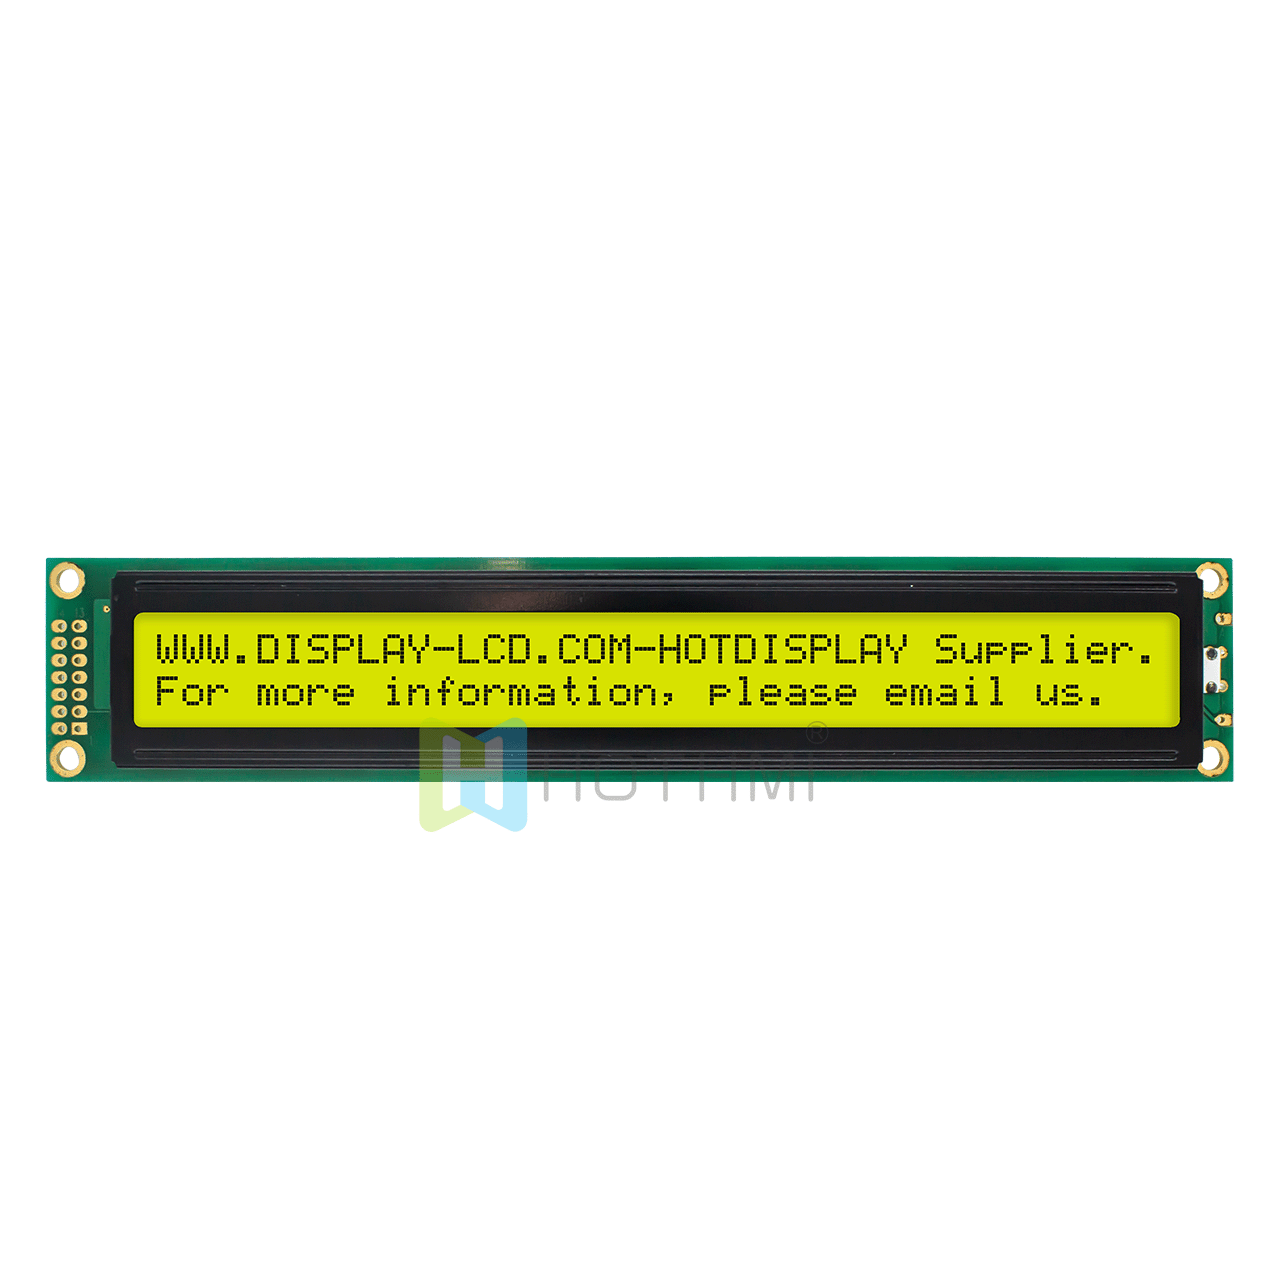 2X40 字符单色液晶显示屏 | STN 正显 | 带黄绿背光 | Arduino显示屏 | Adruino | 5.0v